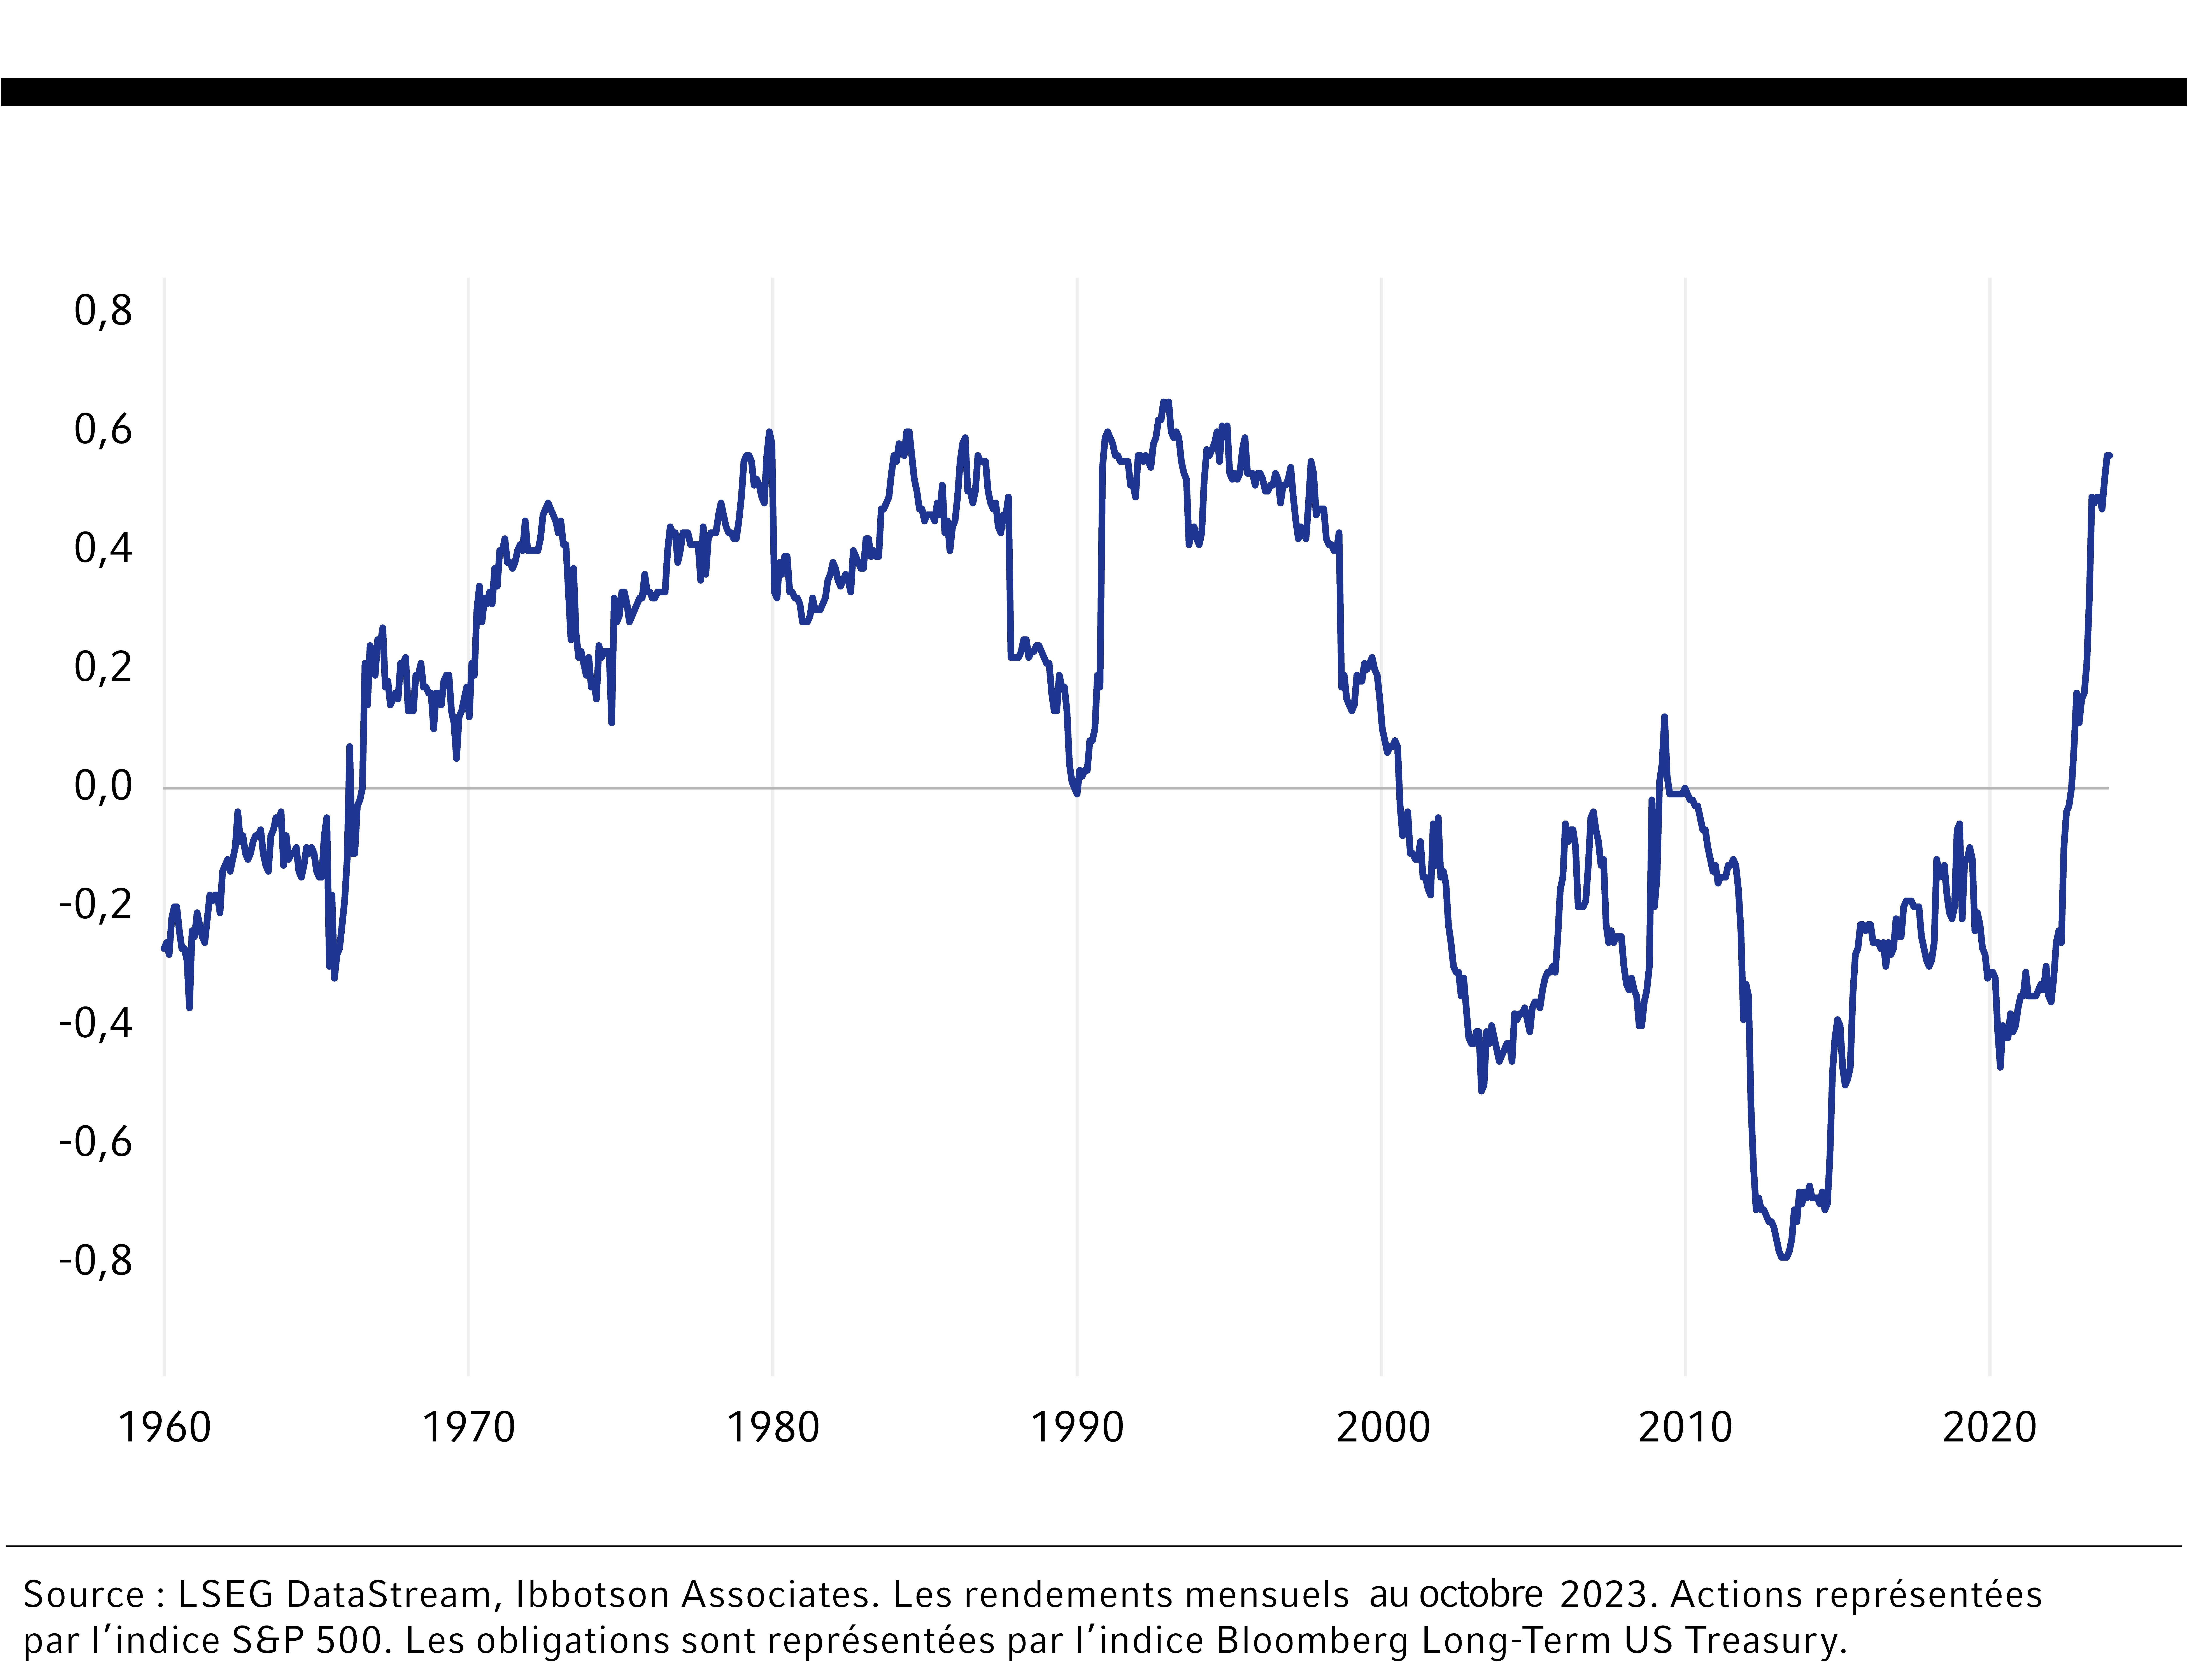 Stock-bond correlation, 3-year rolling window